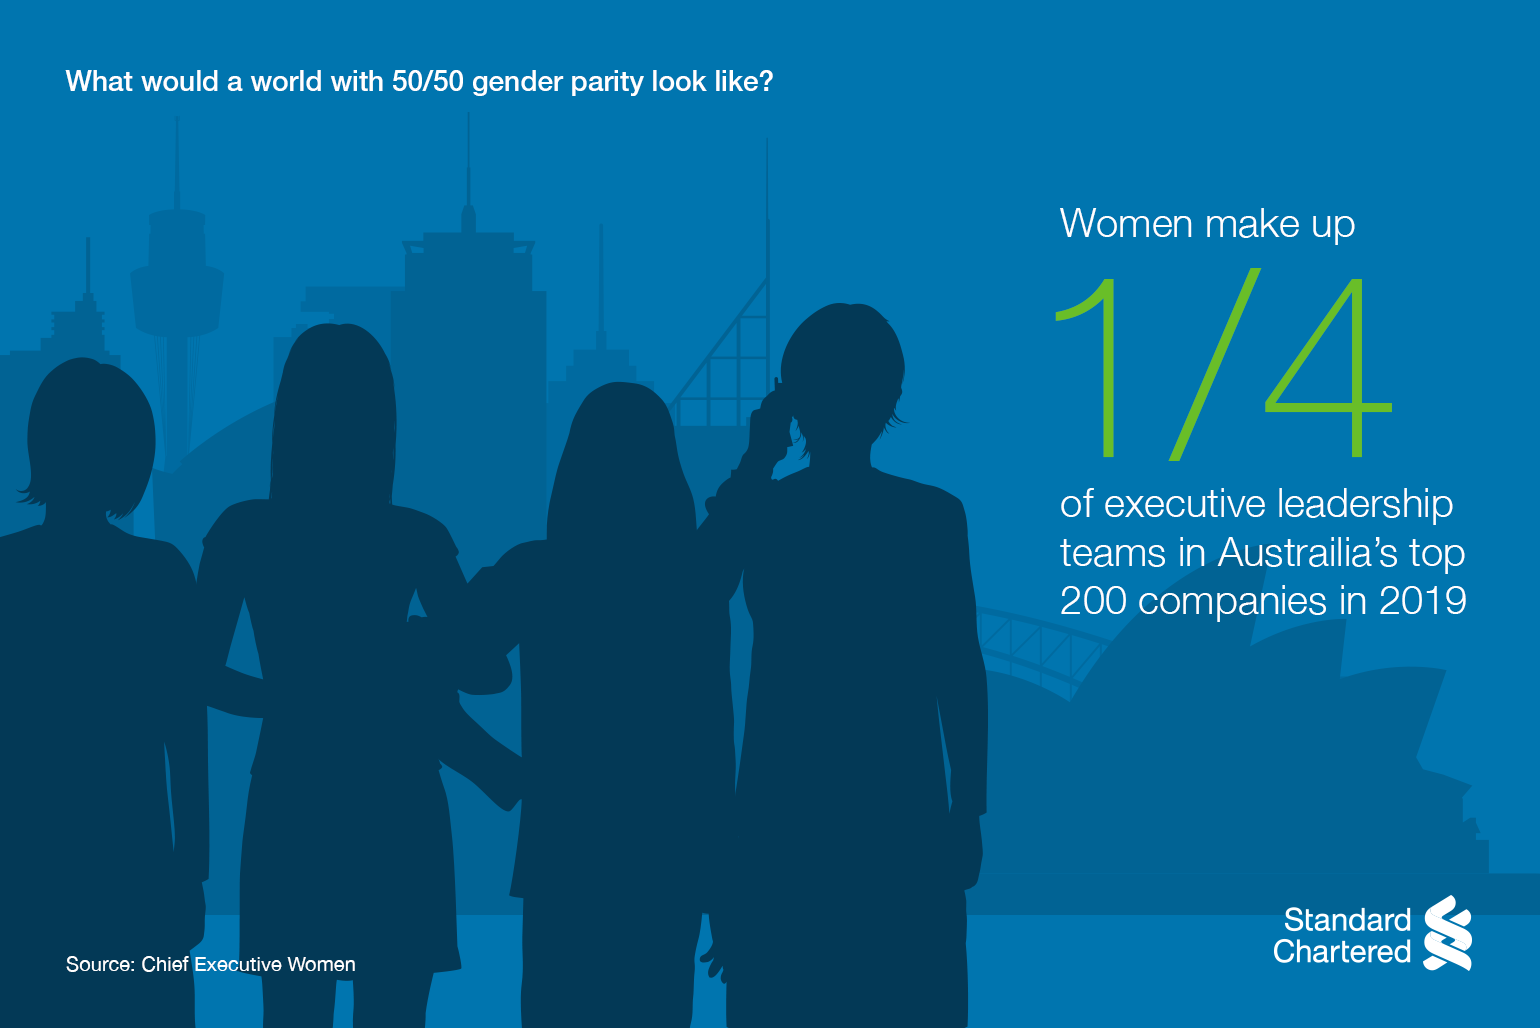 Women make up 1/4 of executive leadership teams in Australia's top 200 companies in 2019